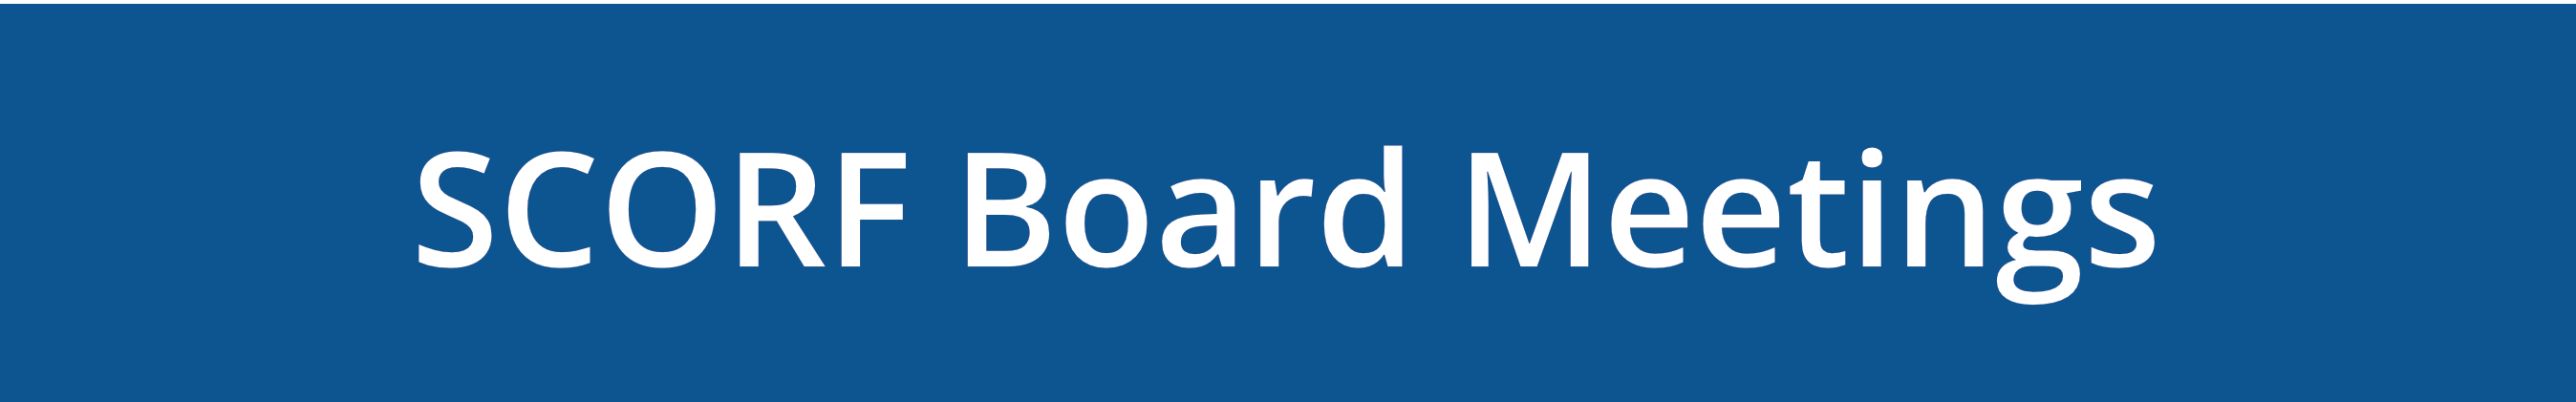 SCORF Board Meetings Sidebar Graphic